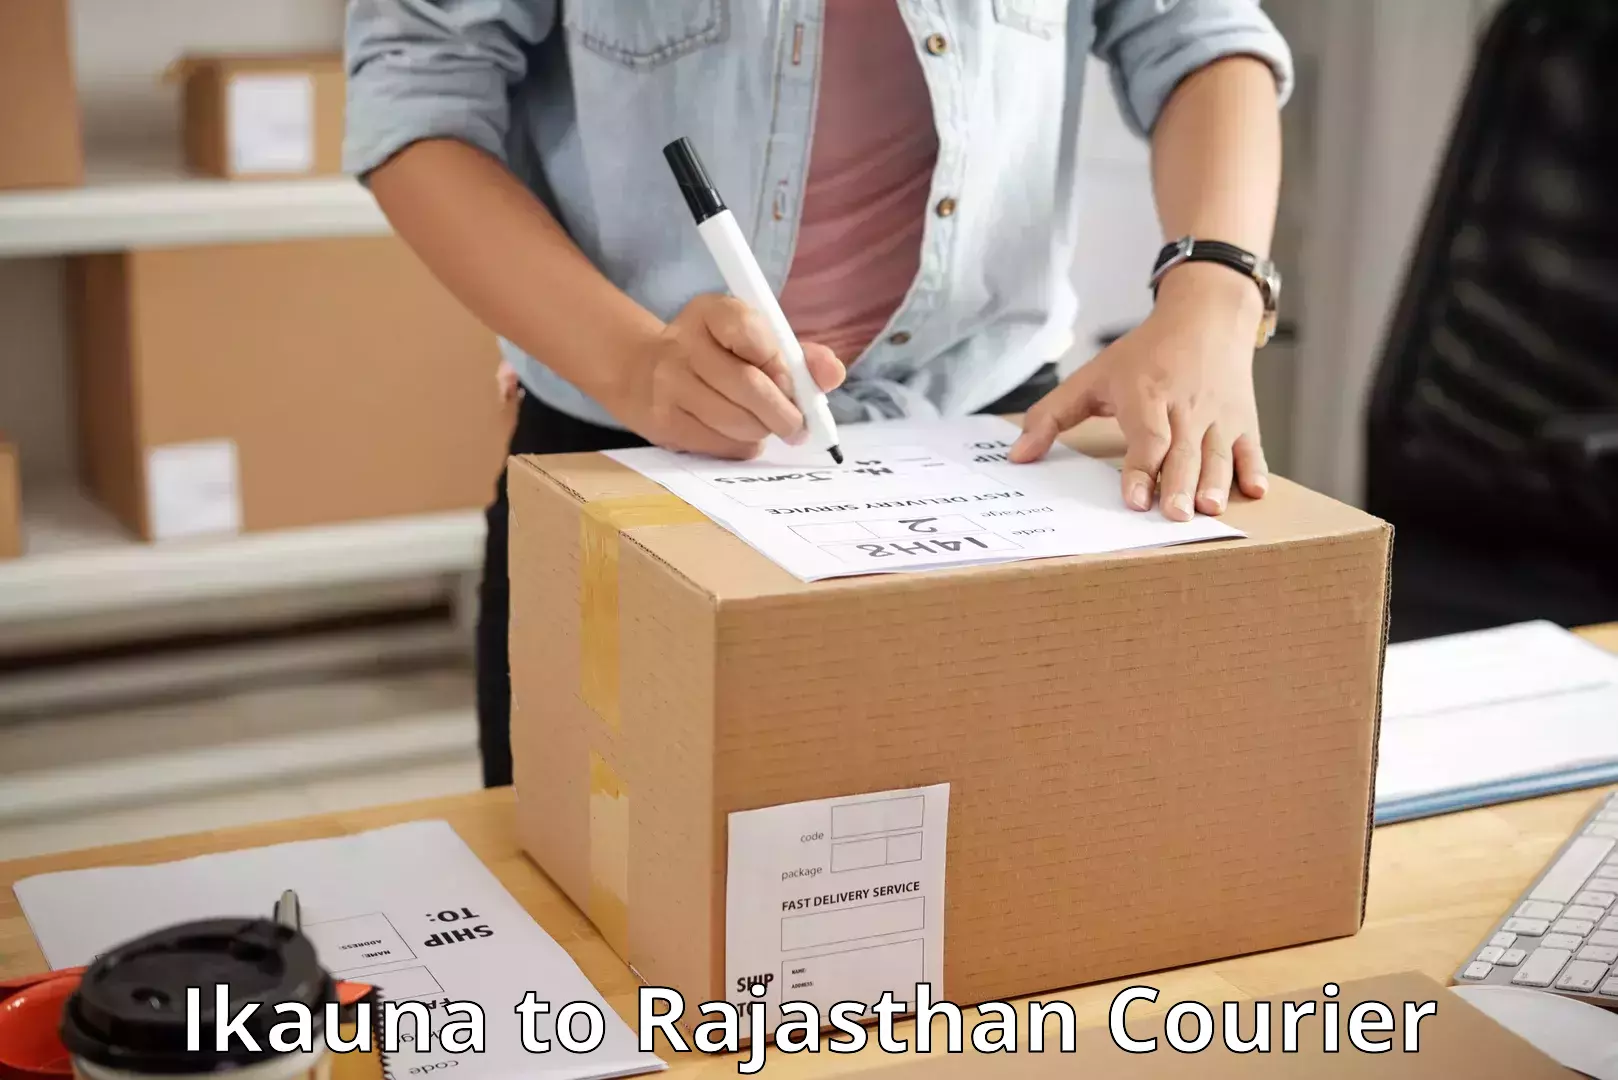 Efficient order fulfillment Ikauna to Rajasthan